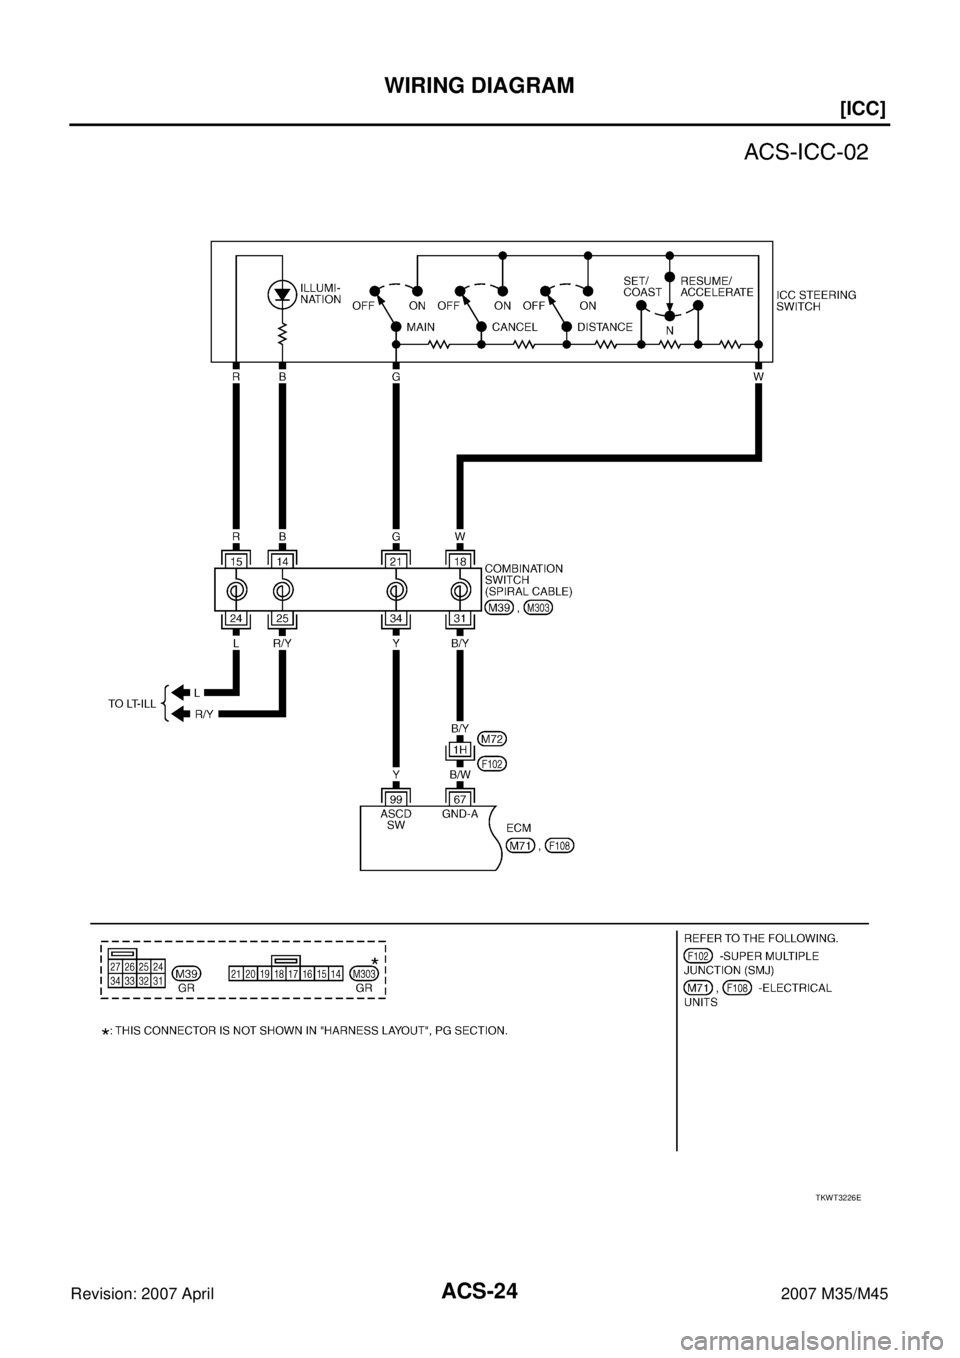 INFINITI M35 2007  Factory Service Manual ACS-24
[ICC]
WIRING DIAGRAM
Revision: 2007 April2007 M35/M45
TKWT3226E 